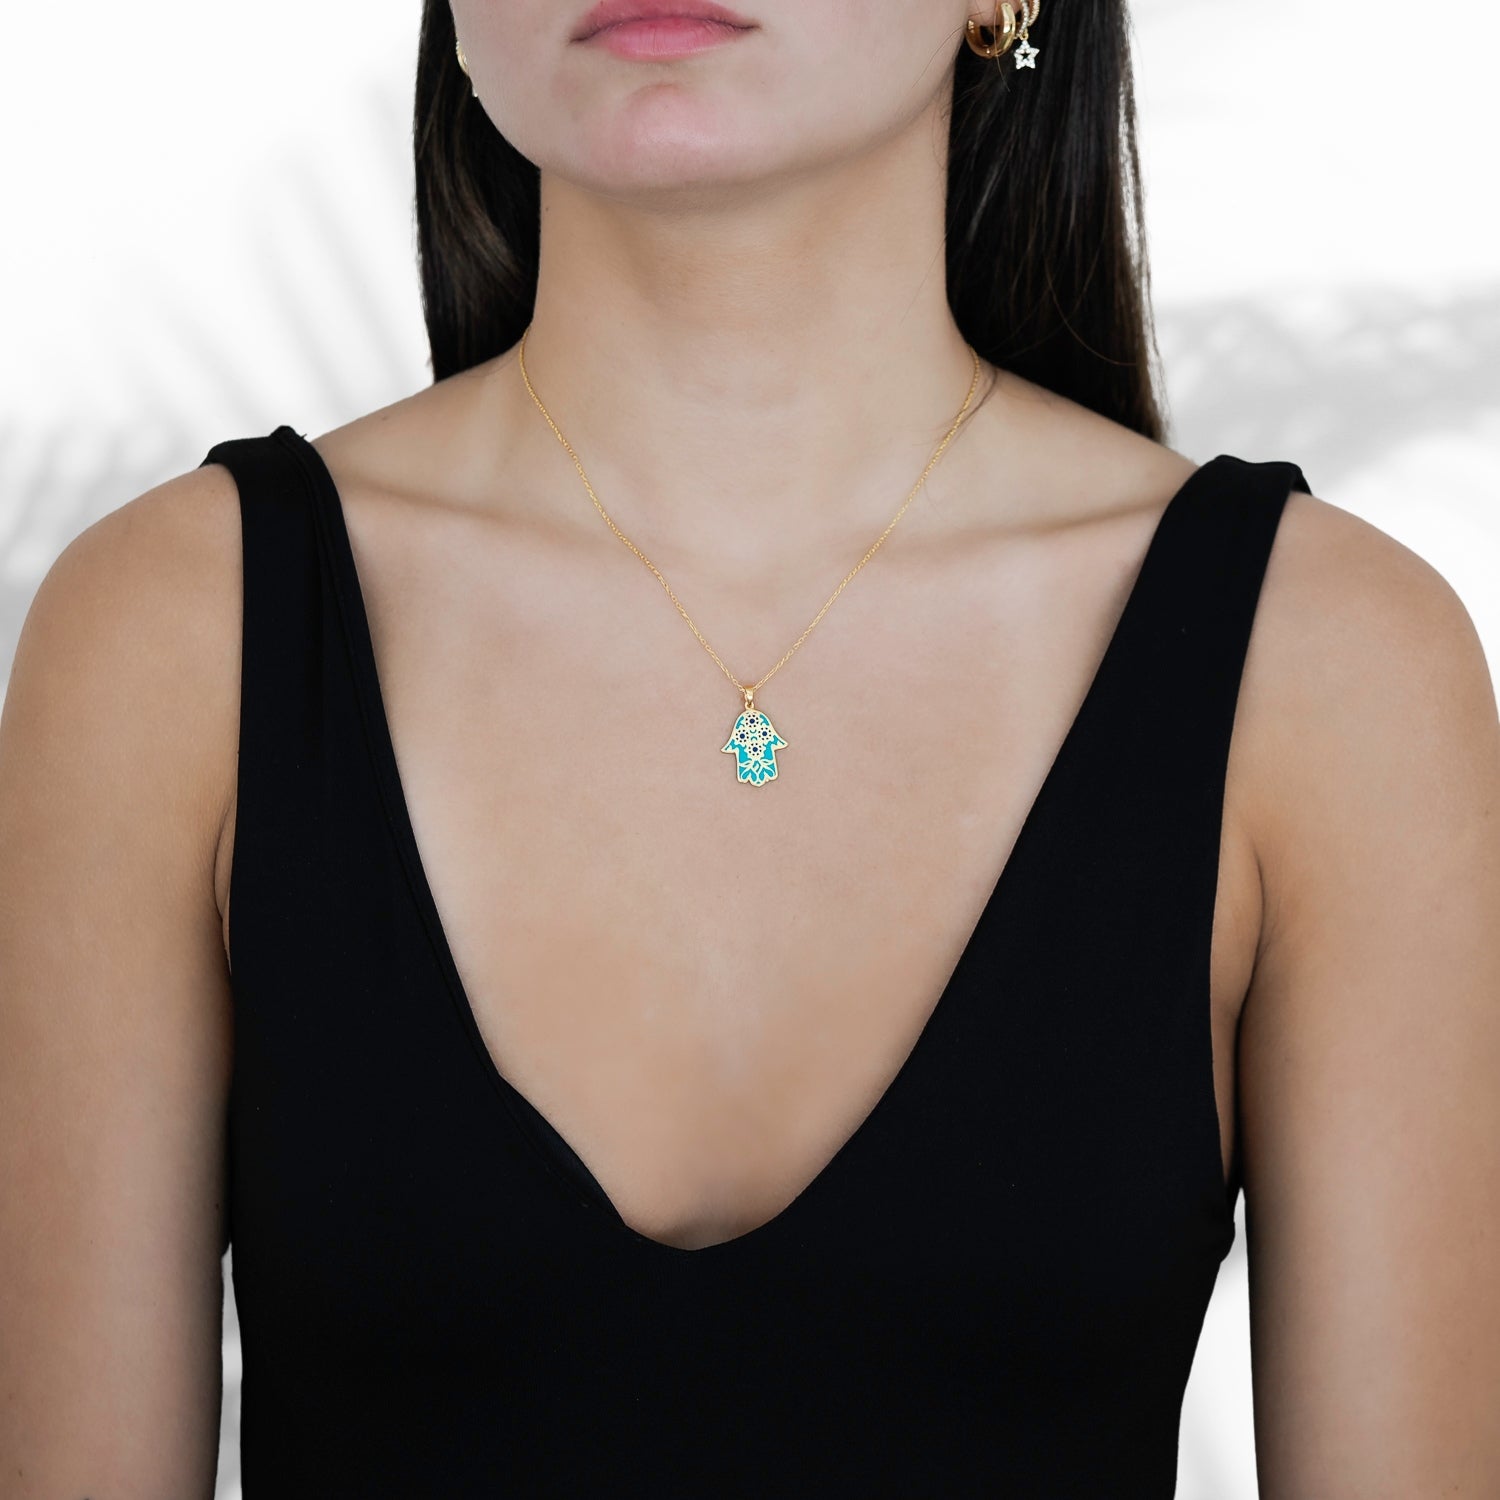 A model wearing the Good Vibes Enamel Hamsa Necklace, radiating positive energy.